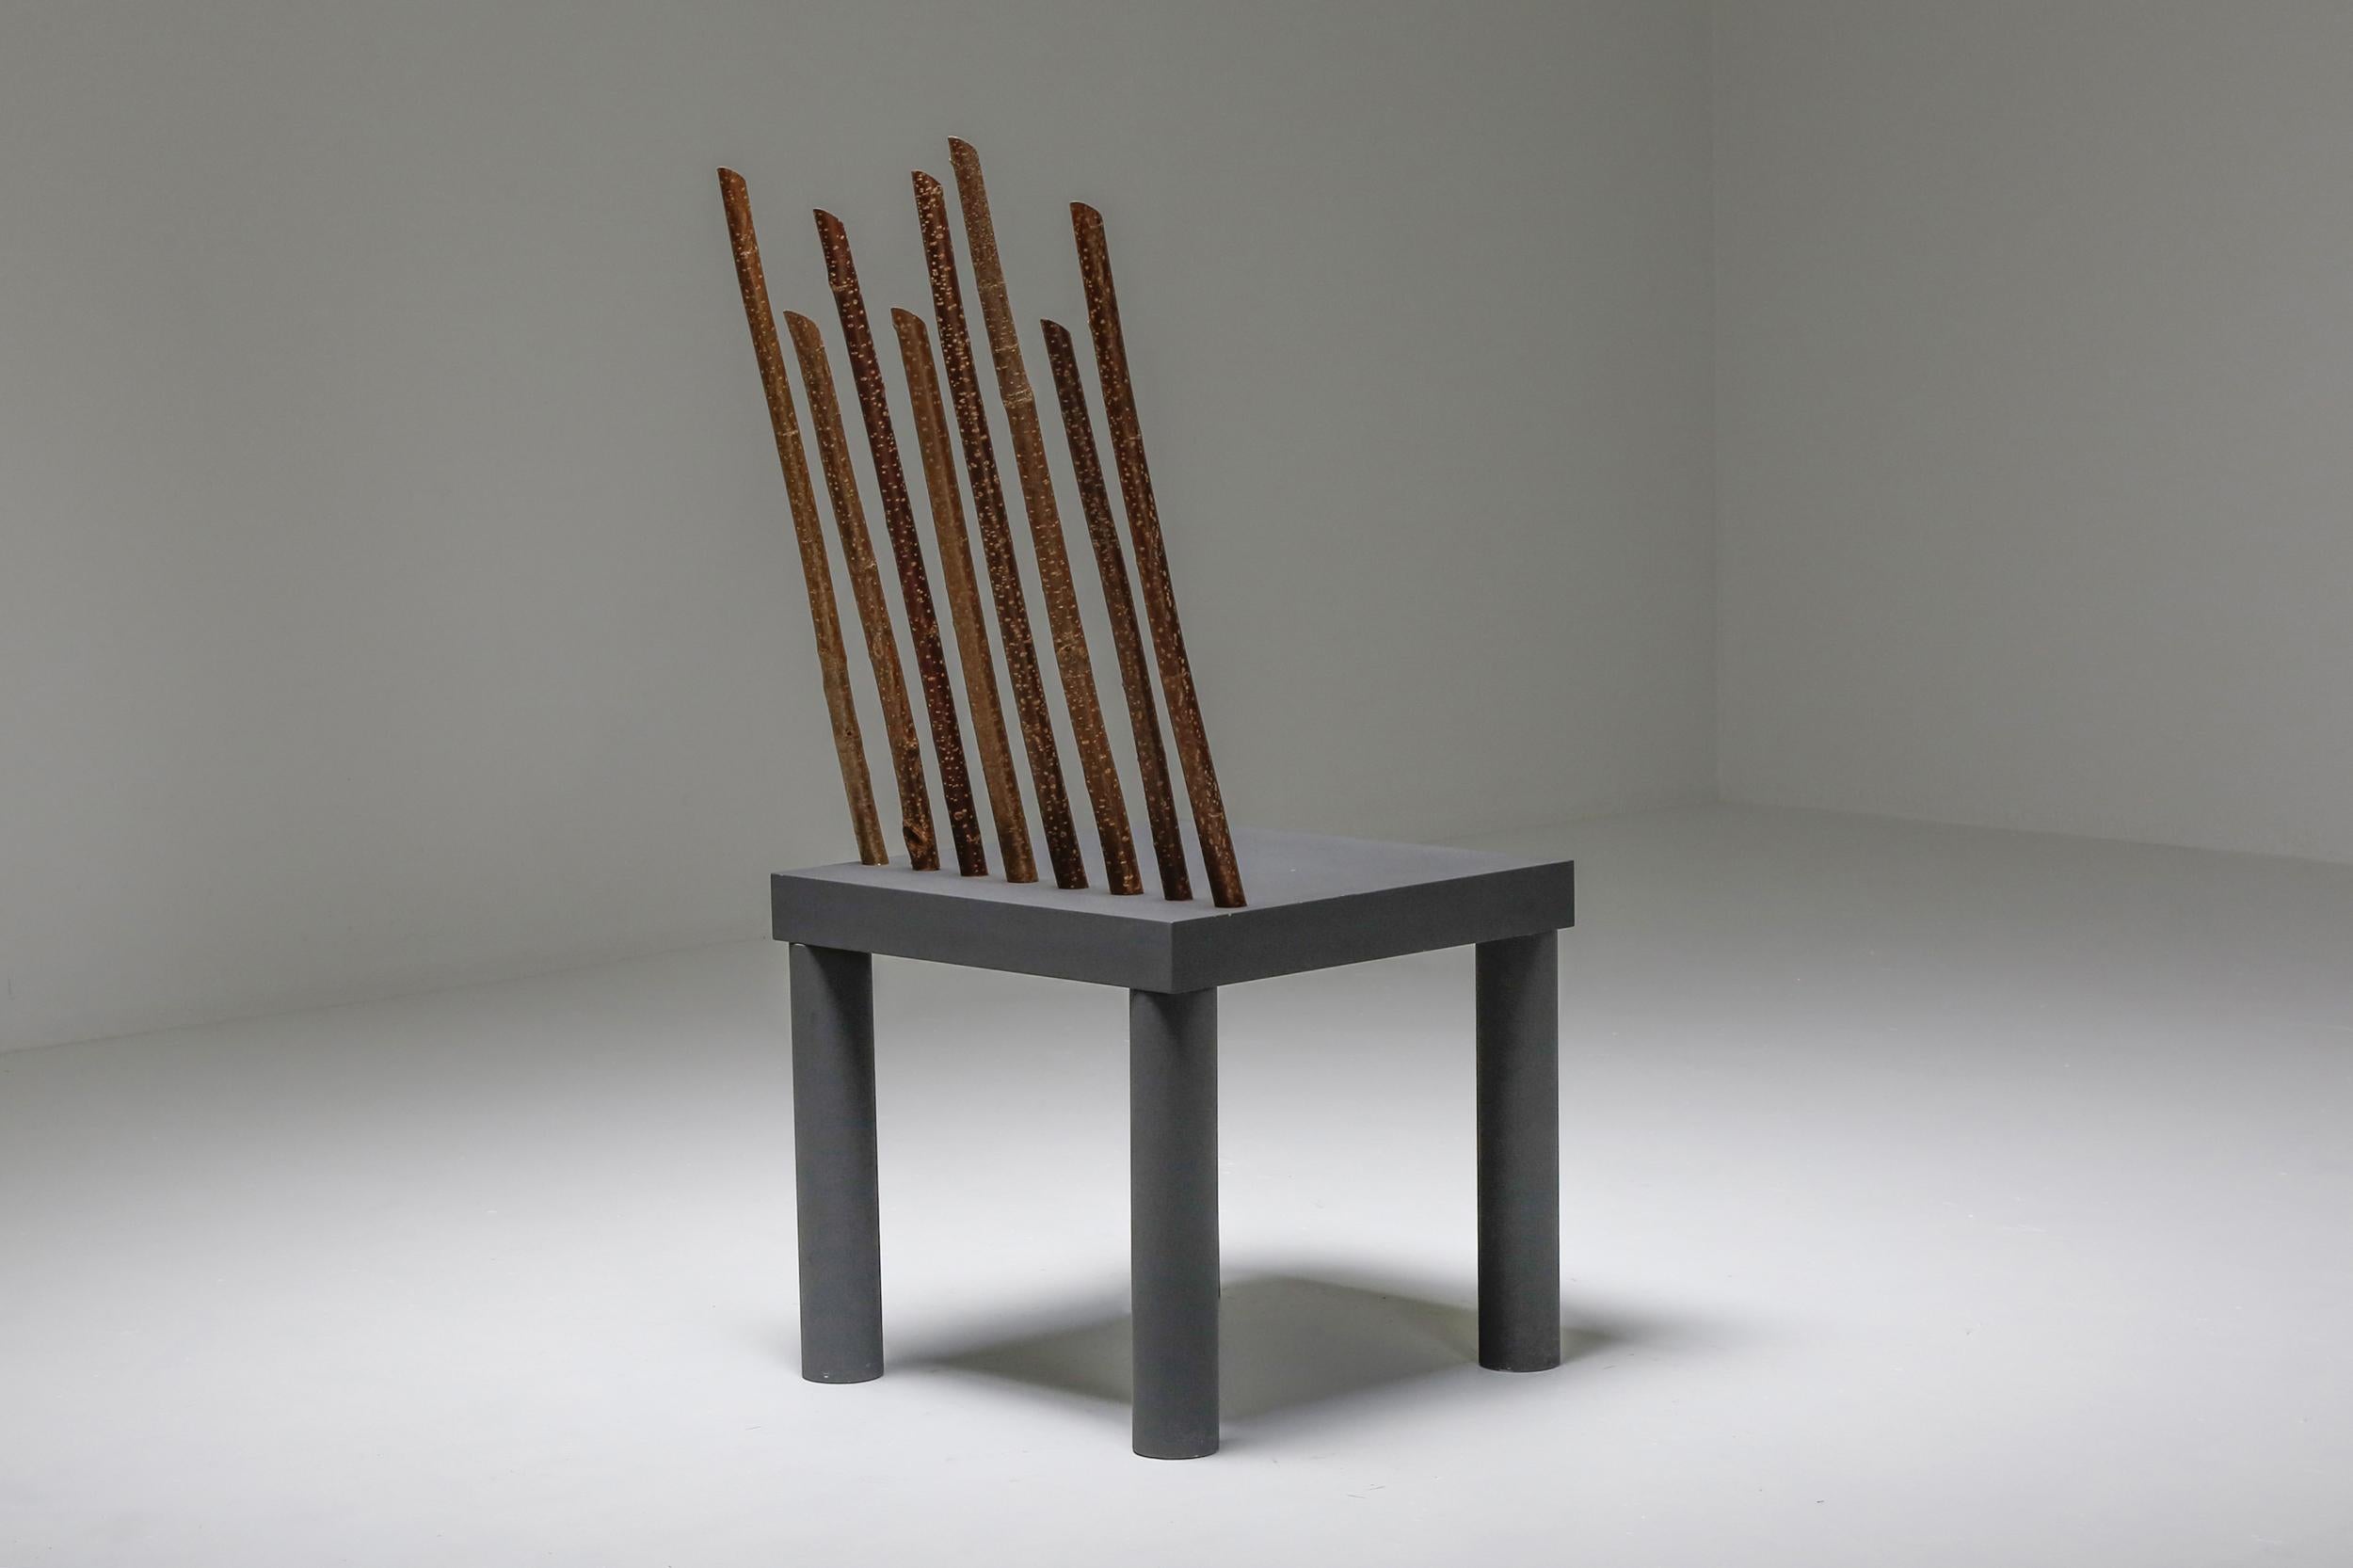 Post-Modern Andrea Branzi Chair from the Animali Domestici Series